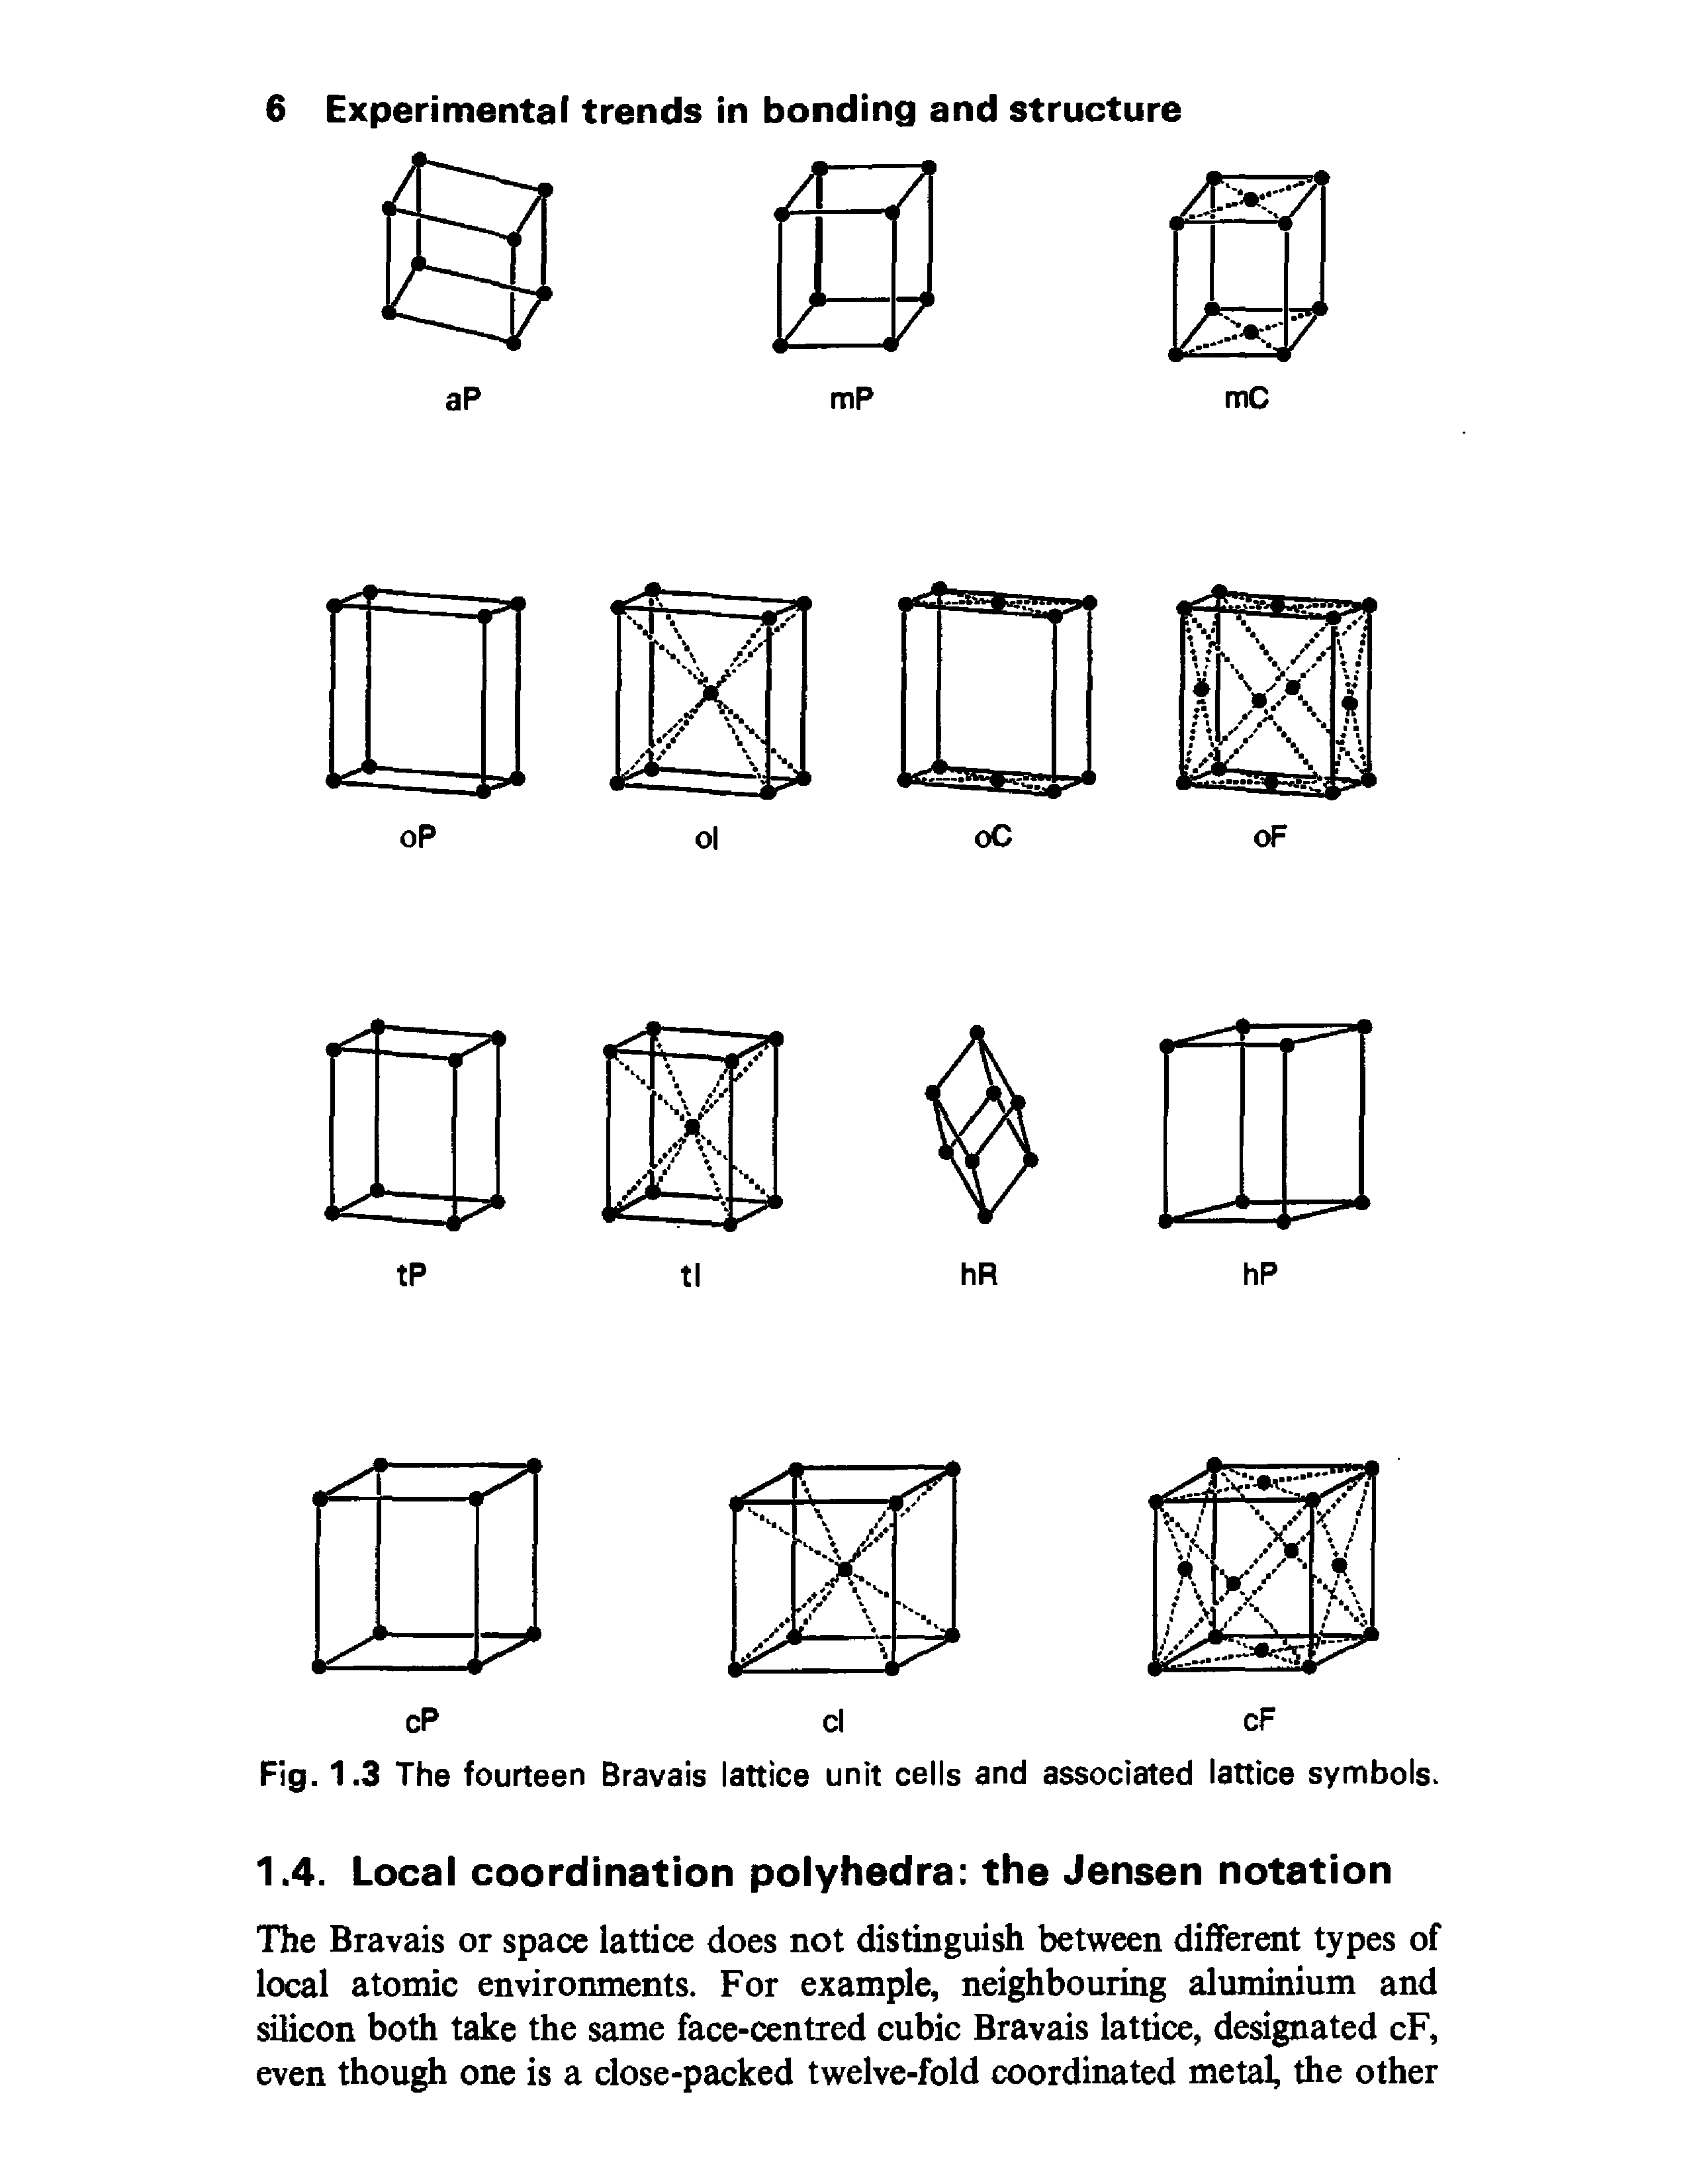 Fig. 1.3 The fourteen Bravais lattice unit cells and associated lattice symbols.